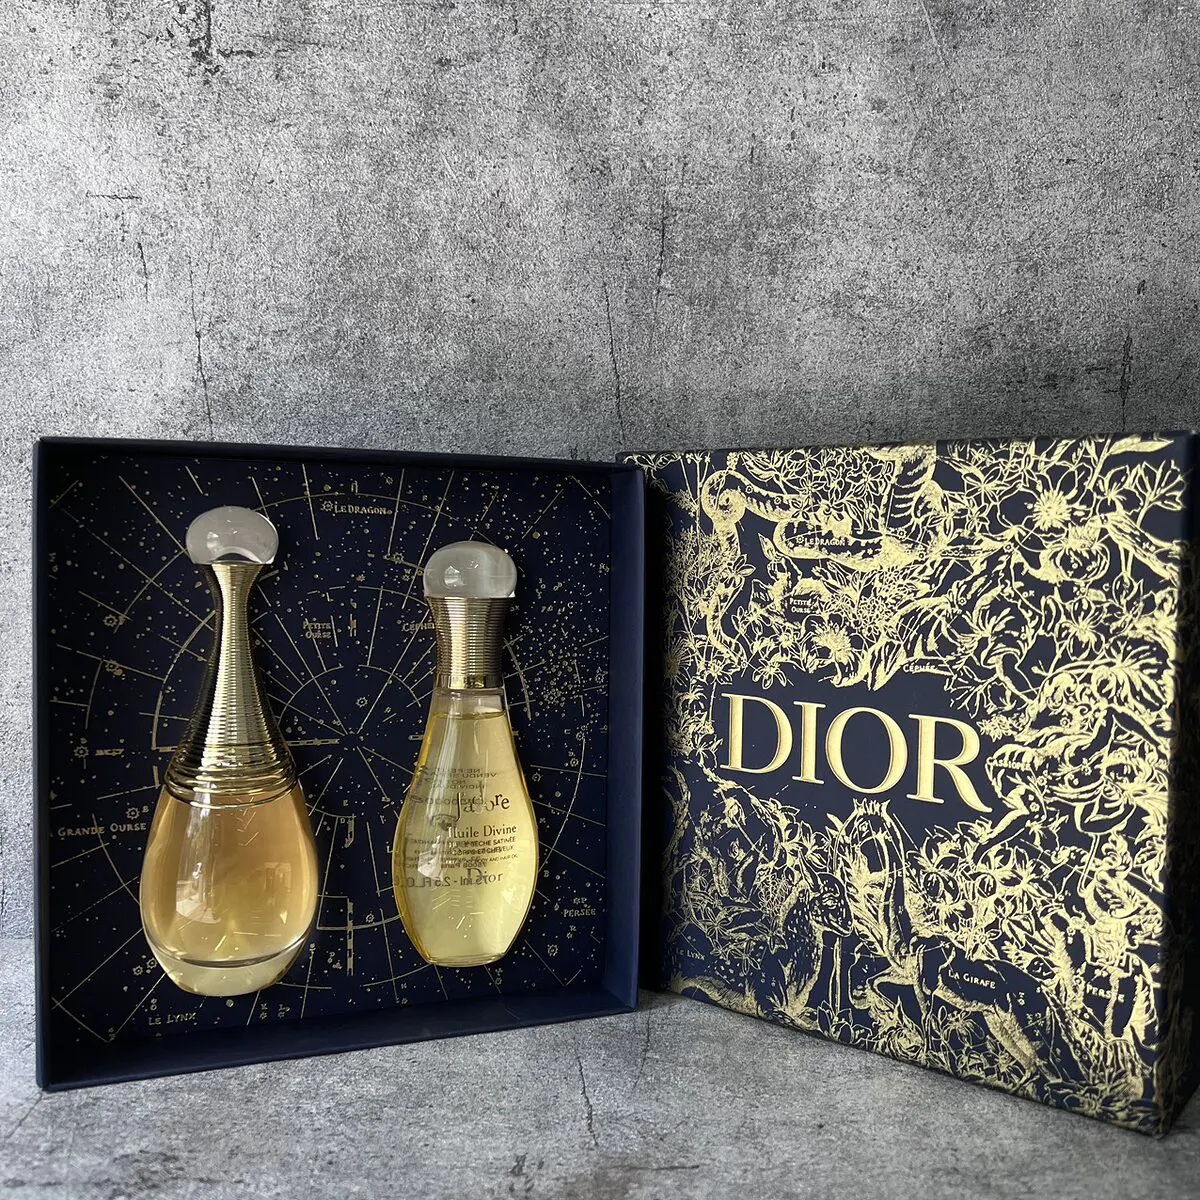 Dior Jadore Eau de Parfum 150ML